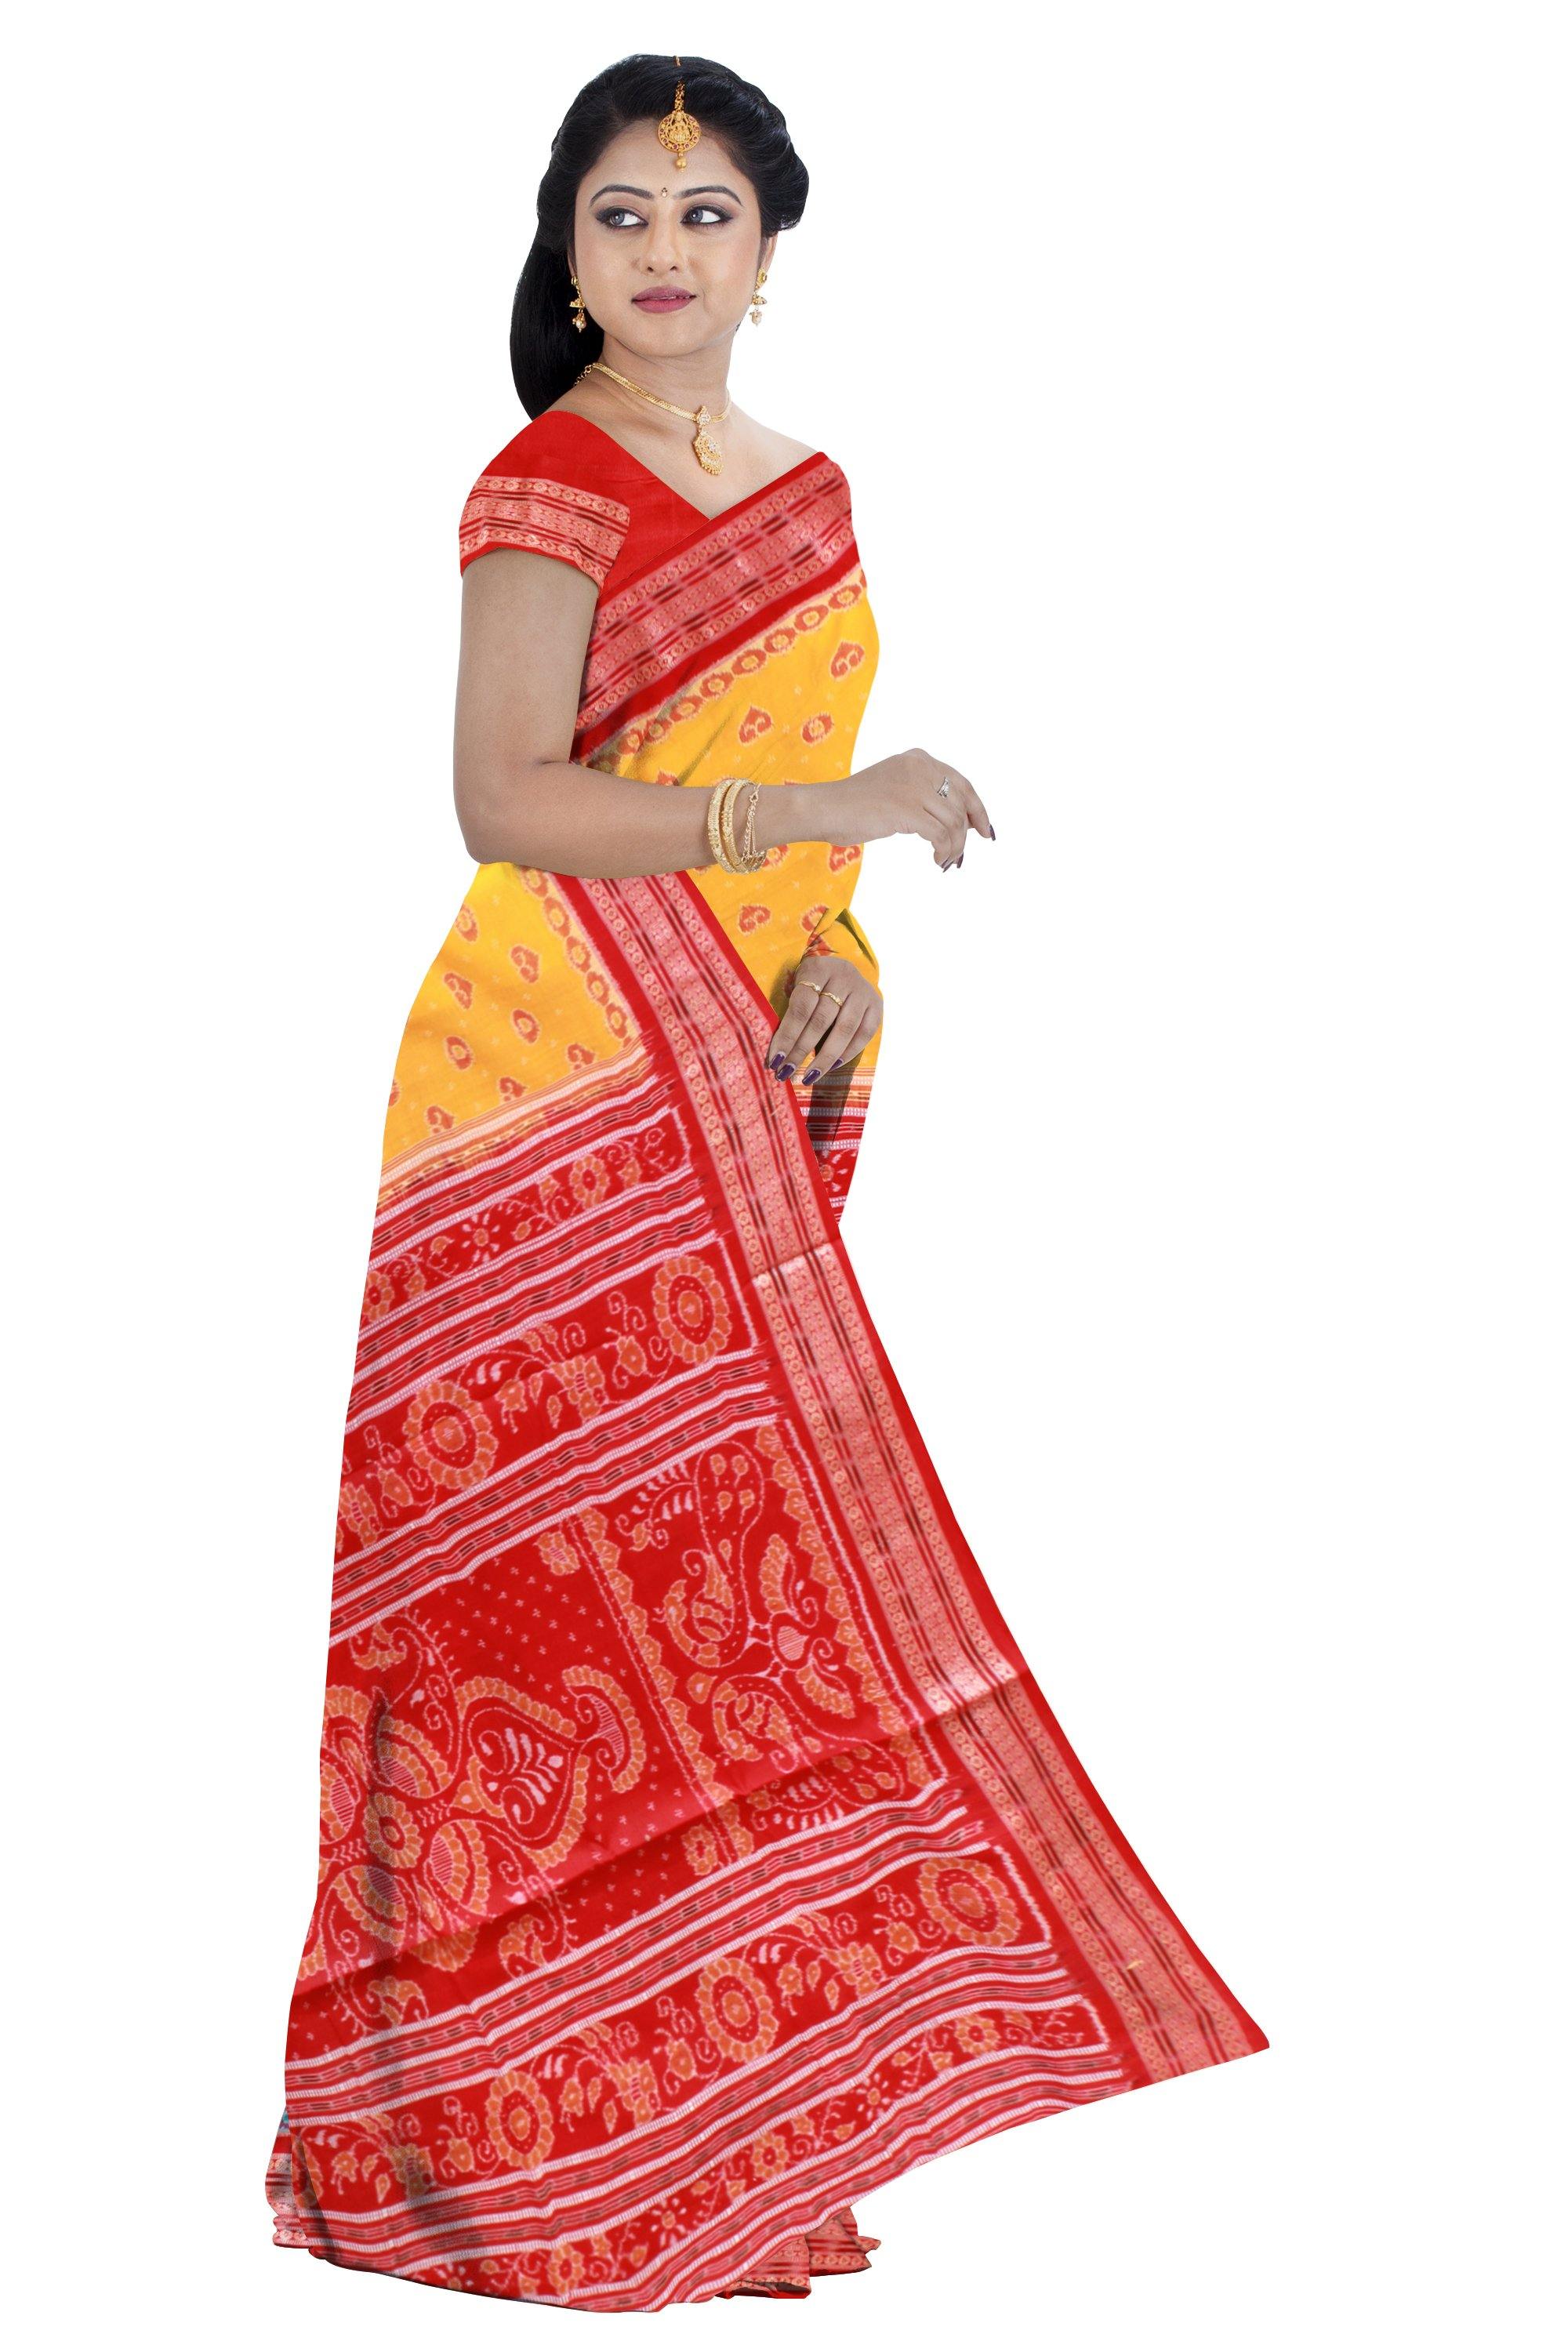 2D design Heart print Sambalpuri saree in Blue and yellow Color With blouse piece. - Koshali Arts & Crafts Enterprise